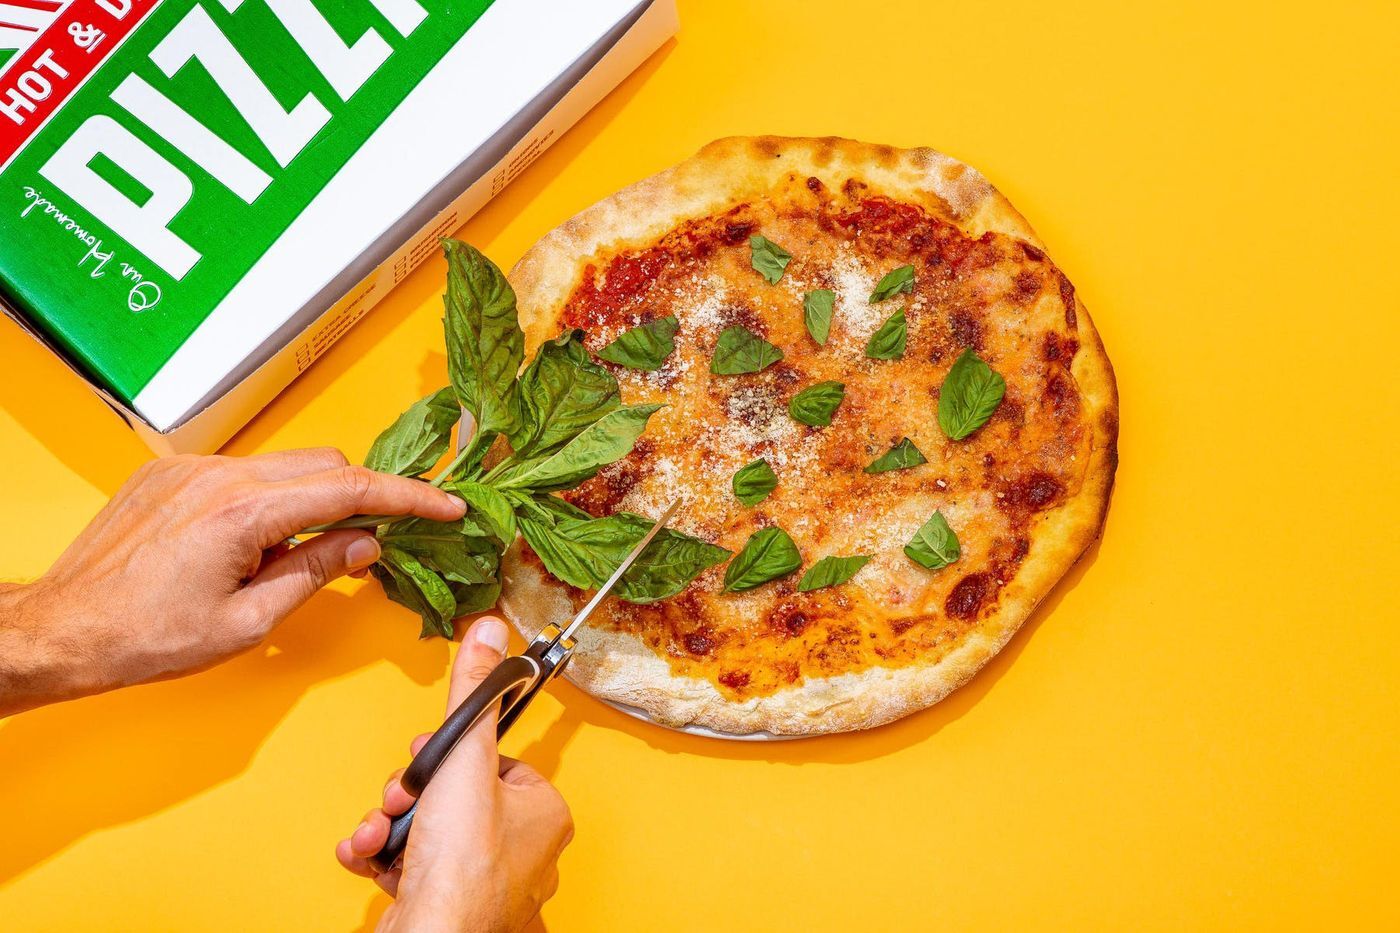 Using scissors, a person cuts basil onto a pizza